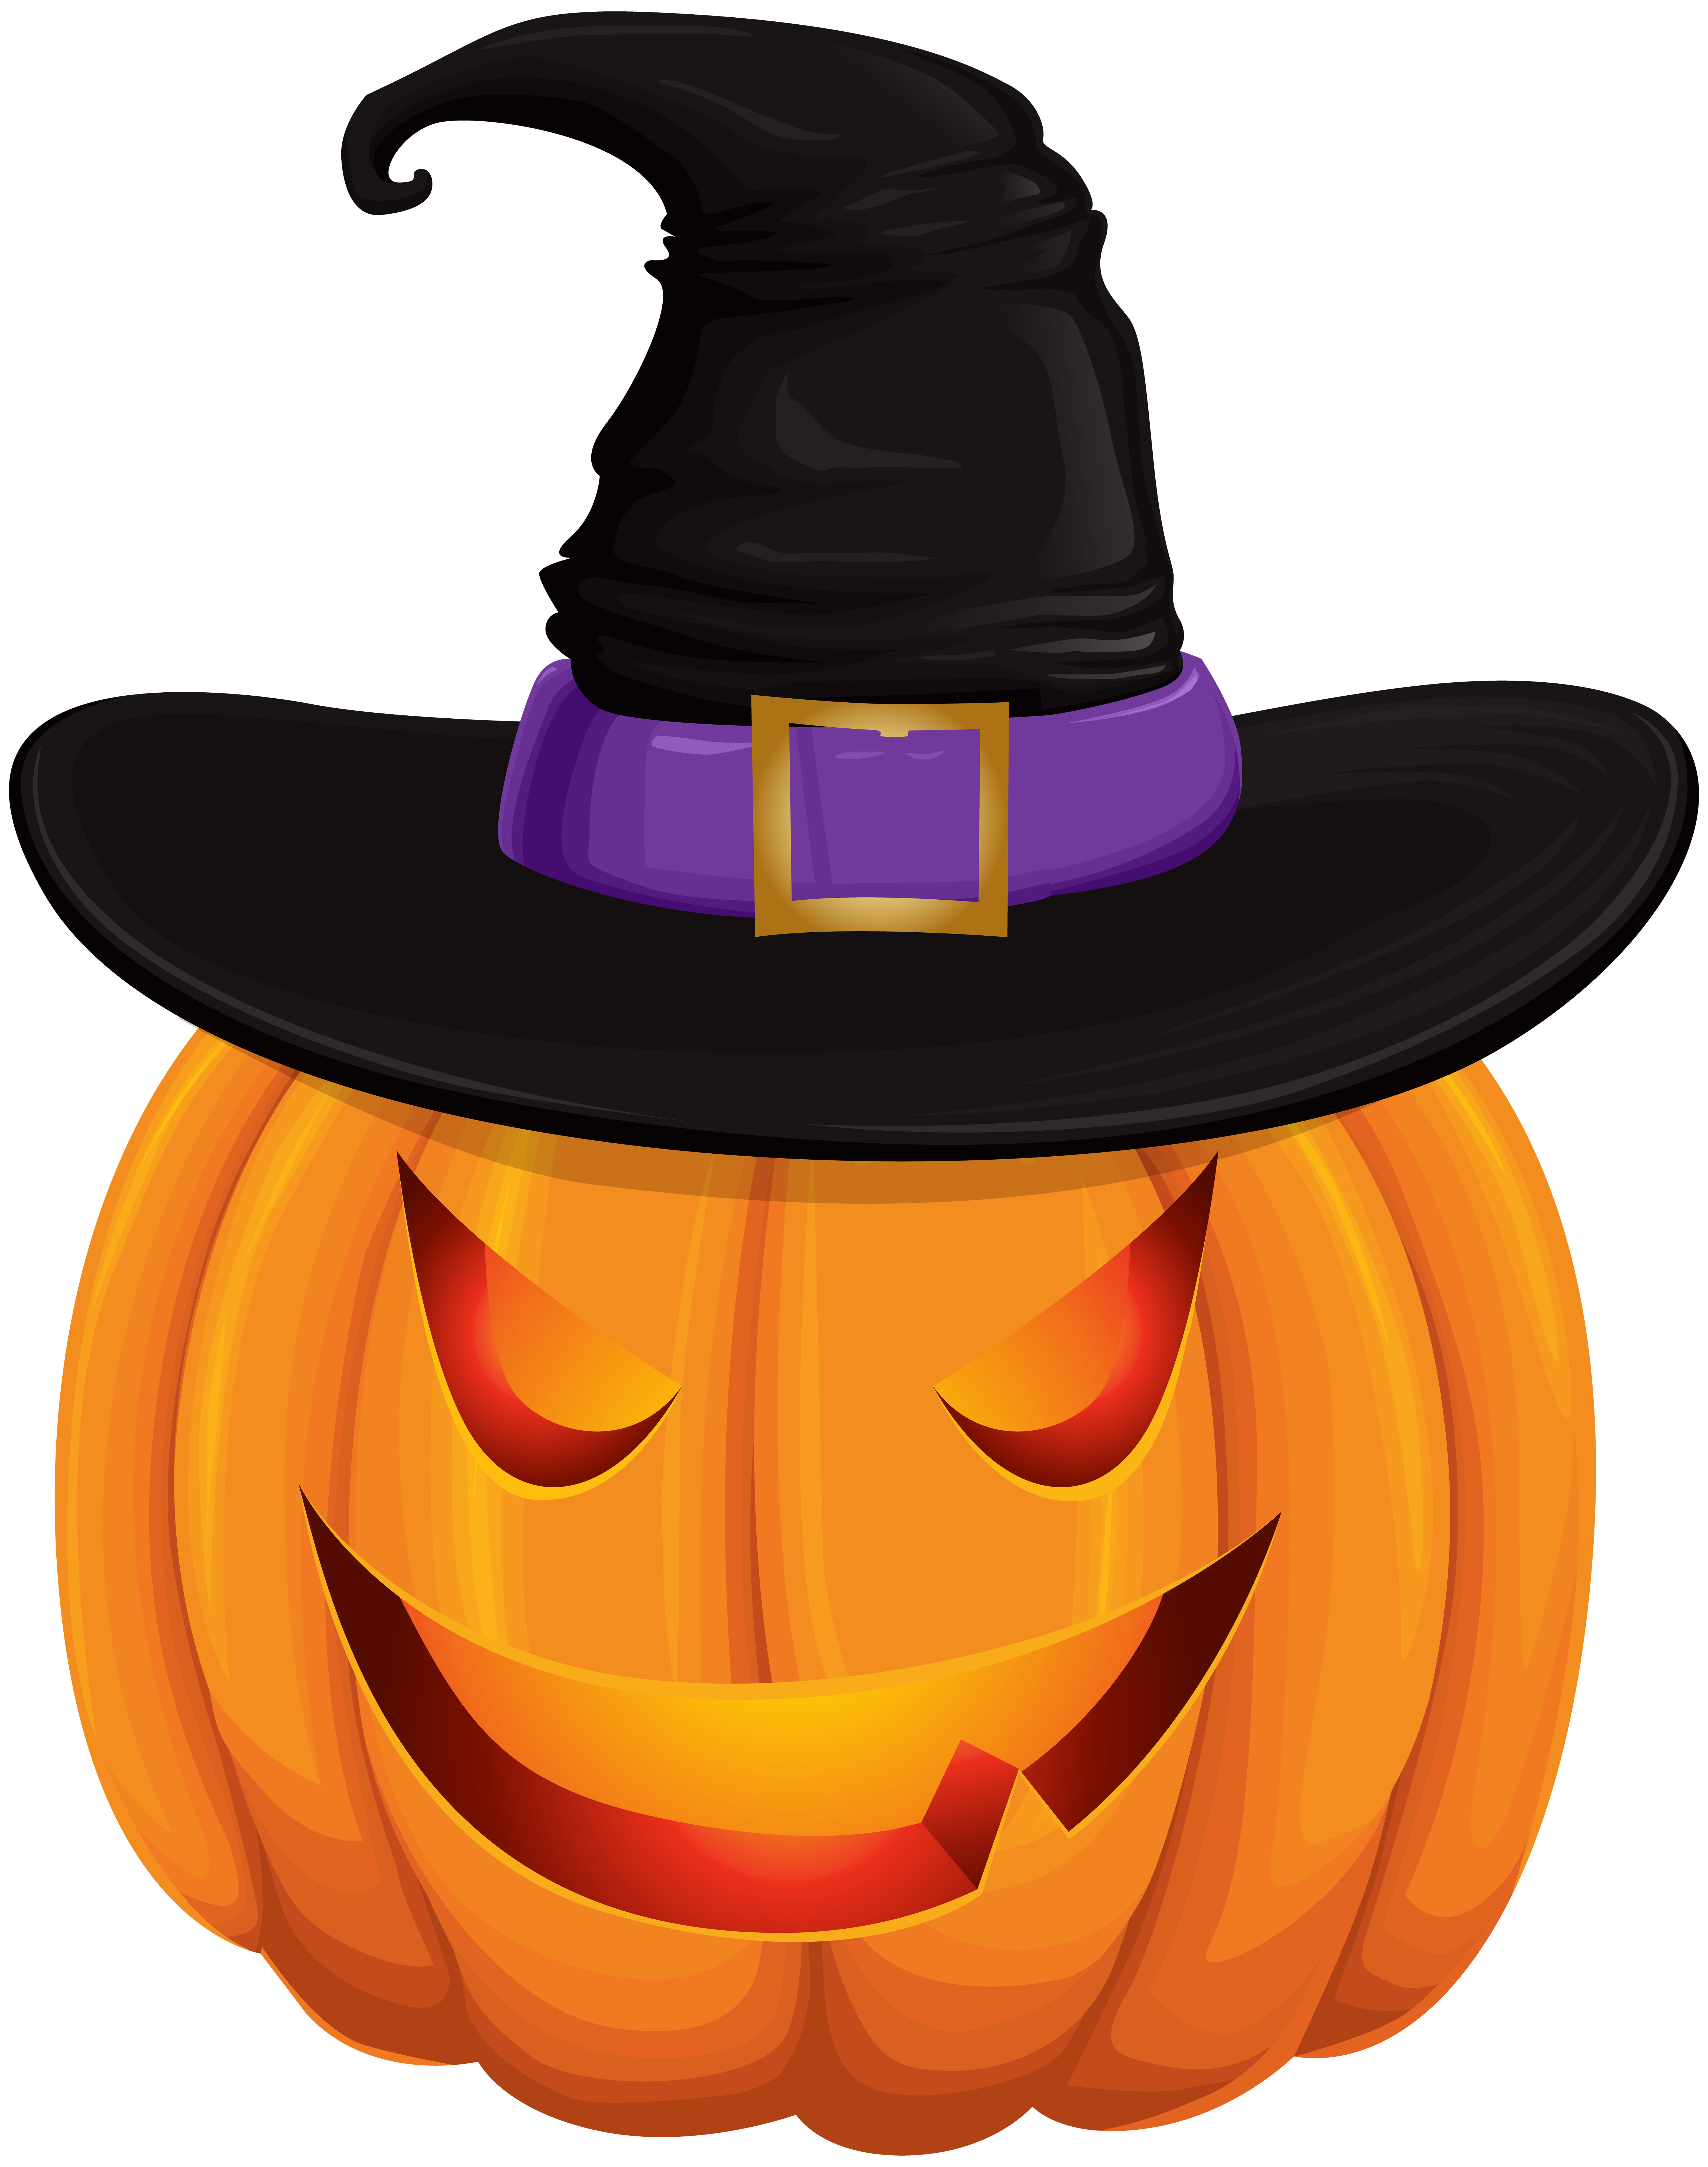 Halloween Pumpkin with Witch Hat Transparent Clip Art.